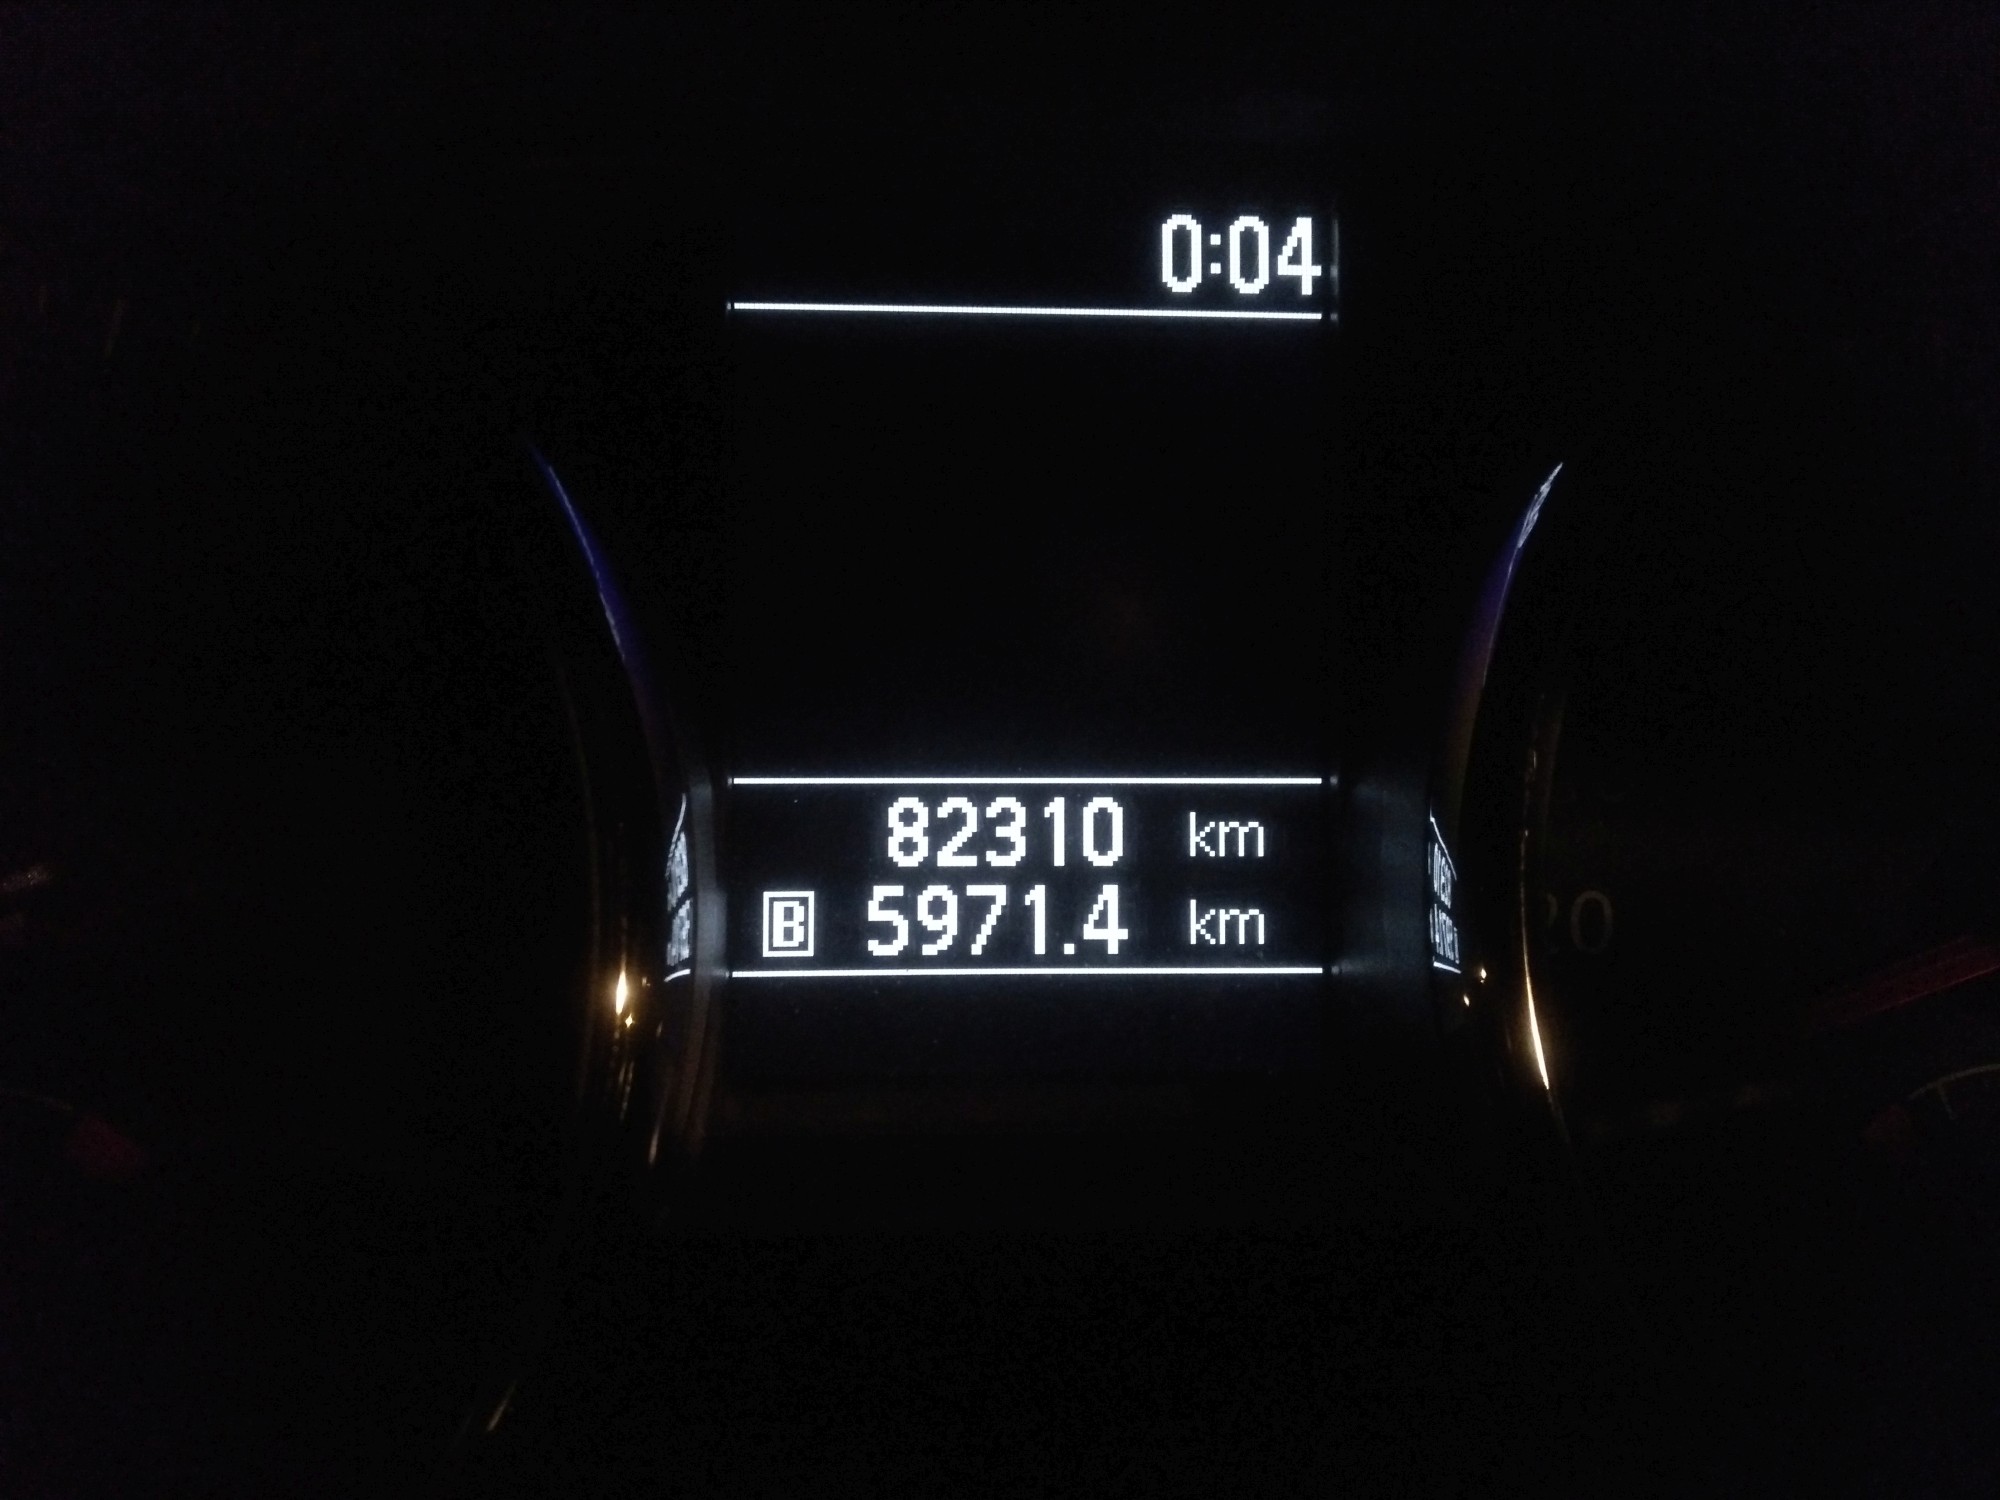 5.971 km